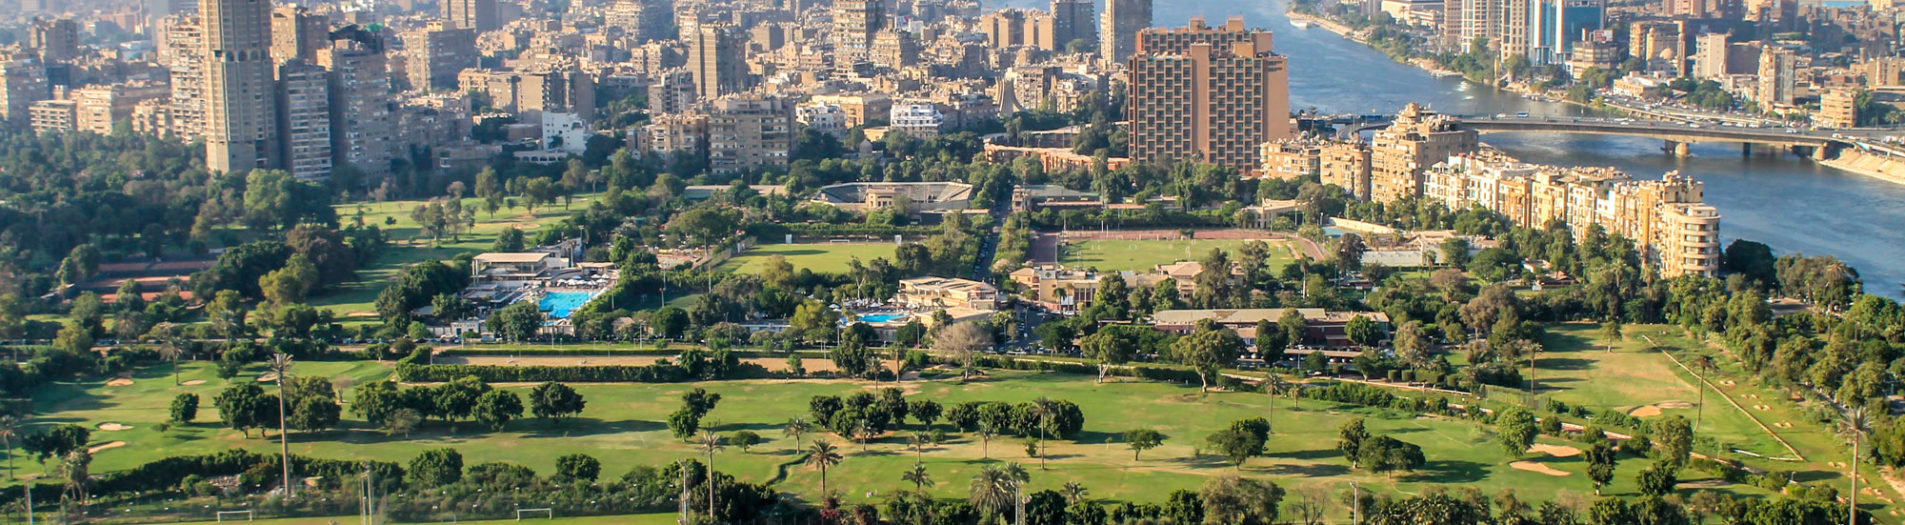 Egypt 2019 مصر